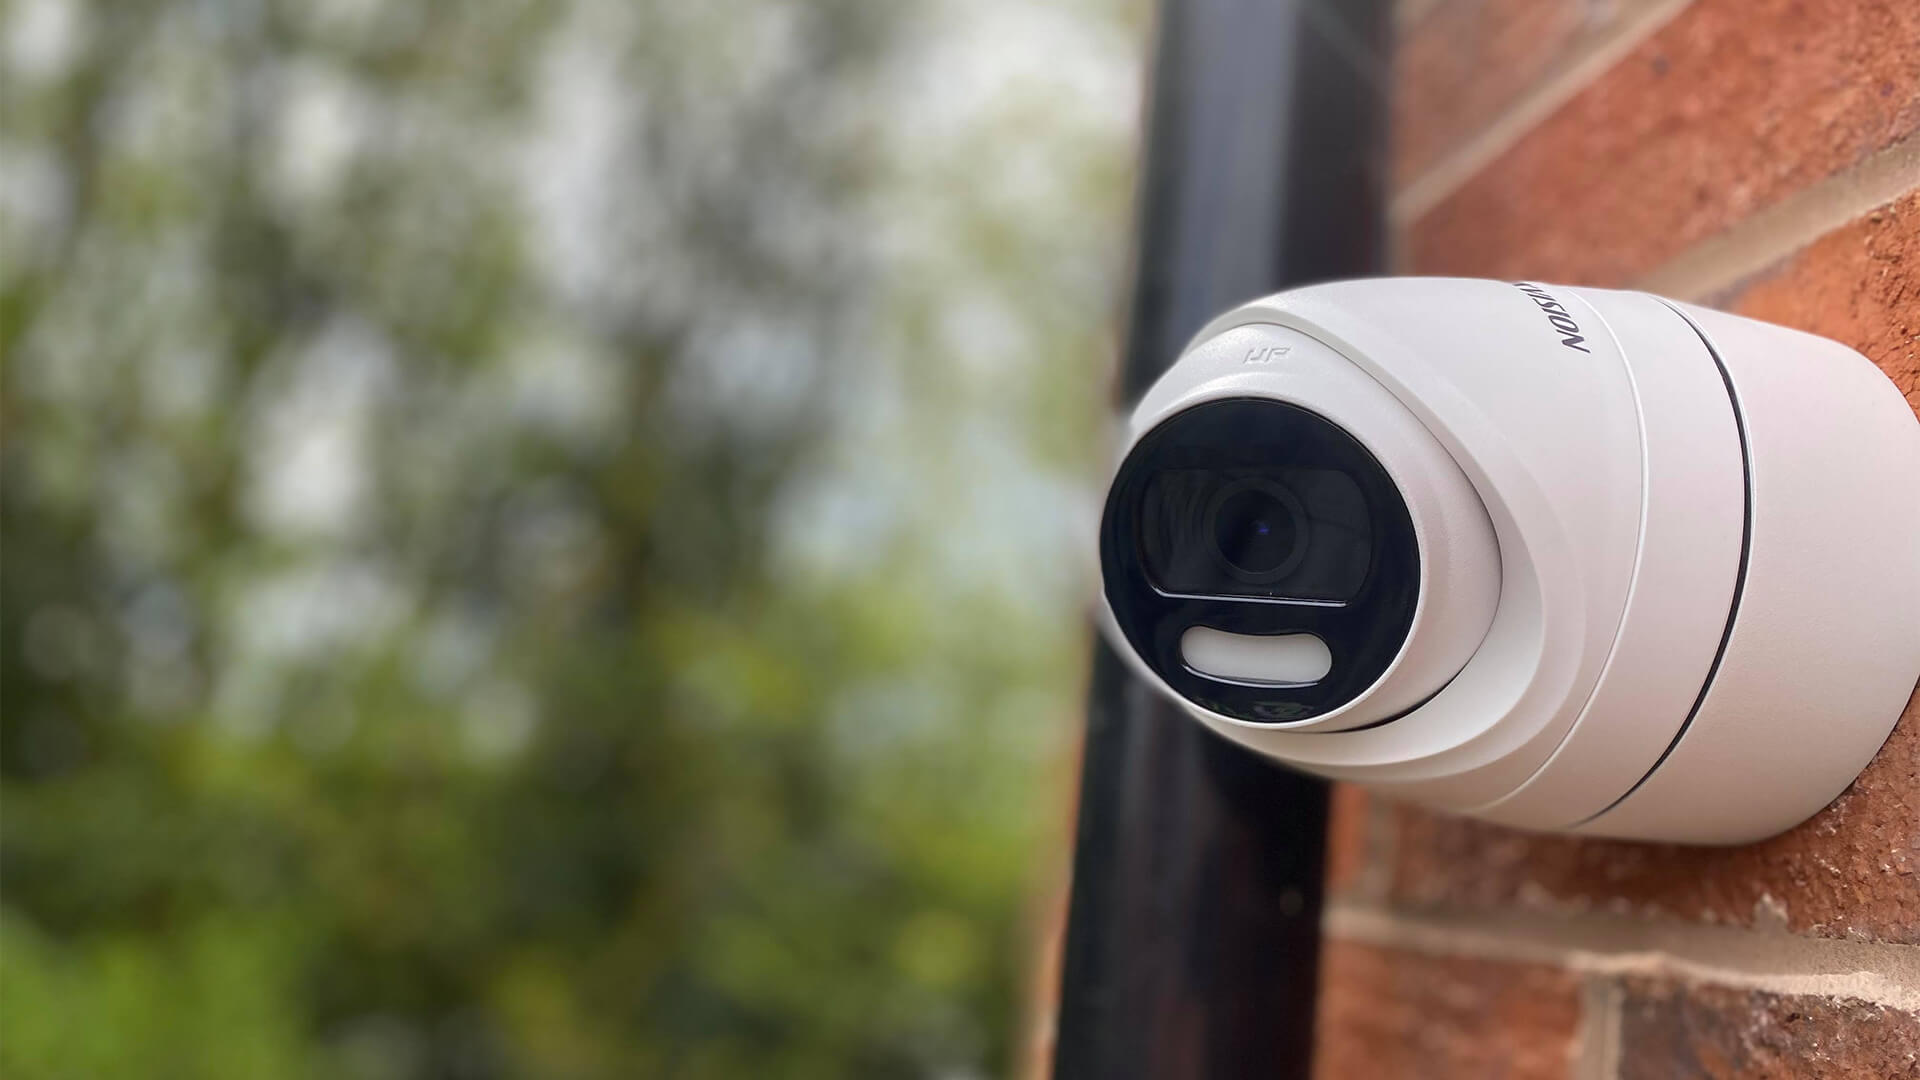 classic surveillance camera or a smart mode